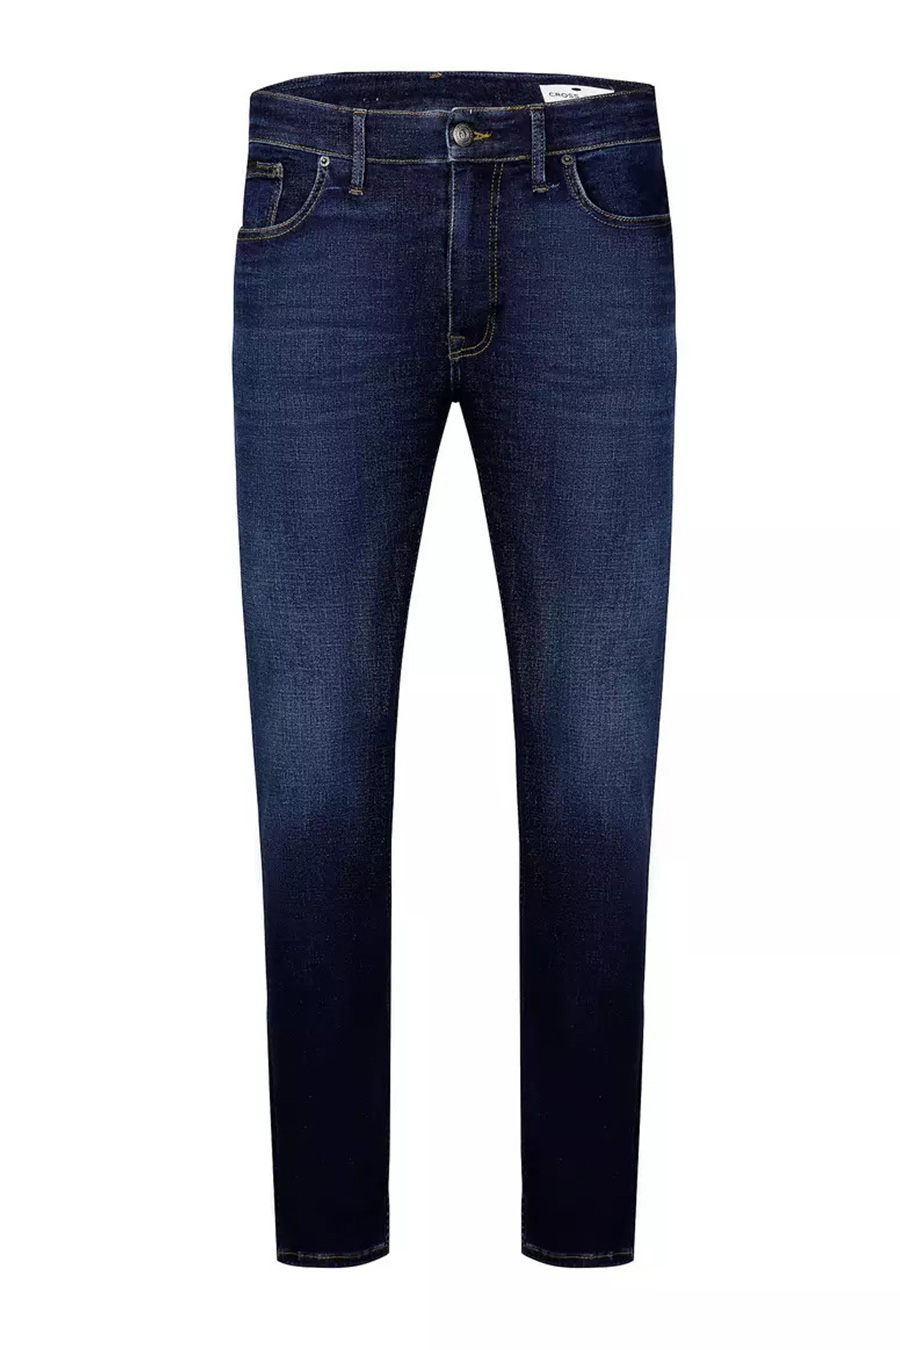 Jeans CROSS JEANS E169-067